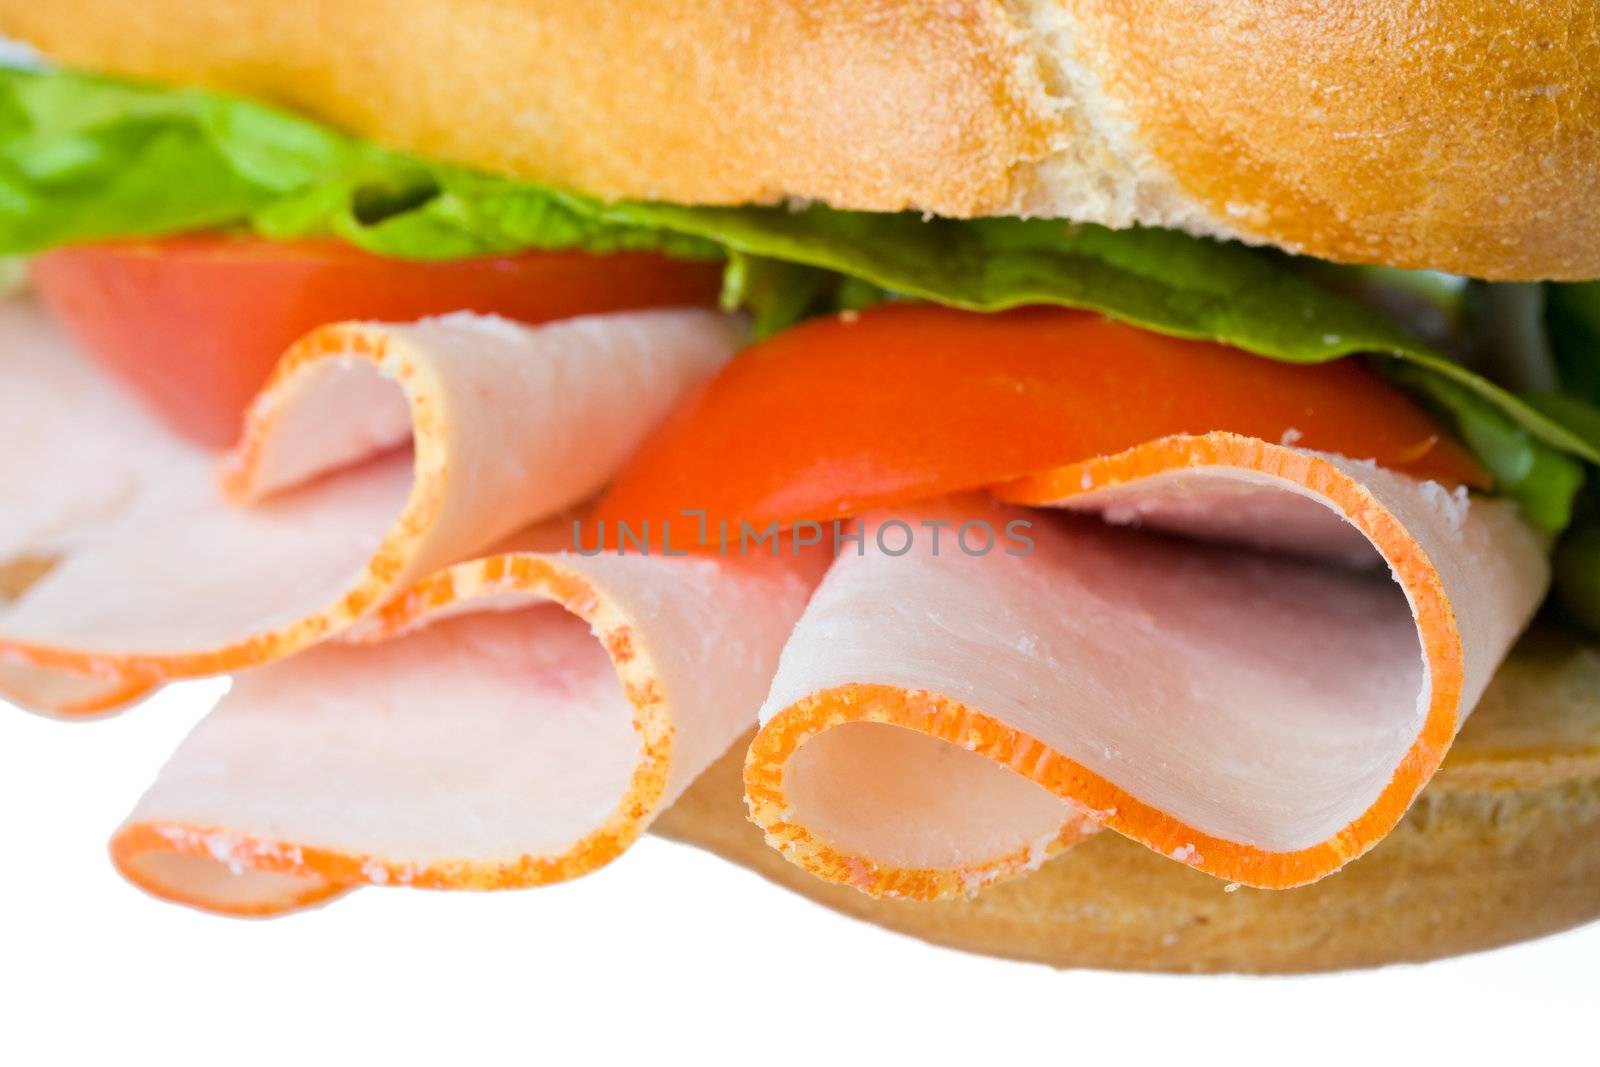 detail of a sandwich by bernjuer